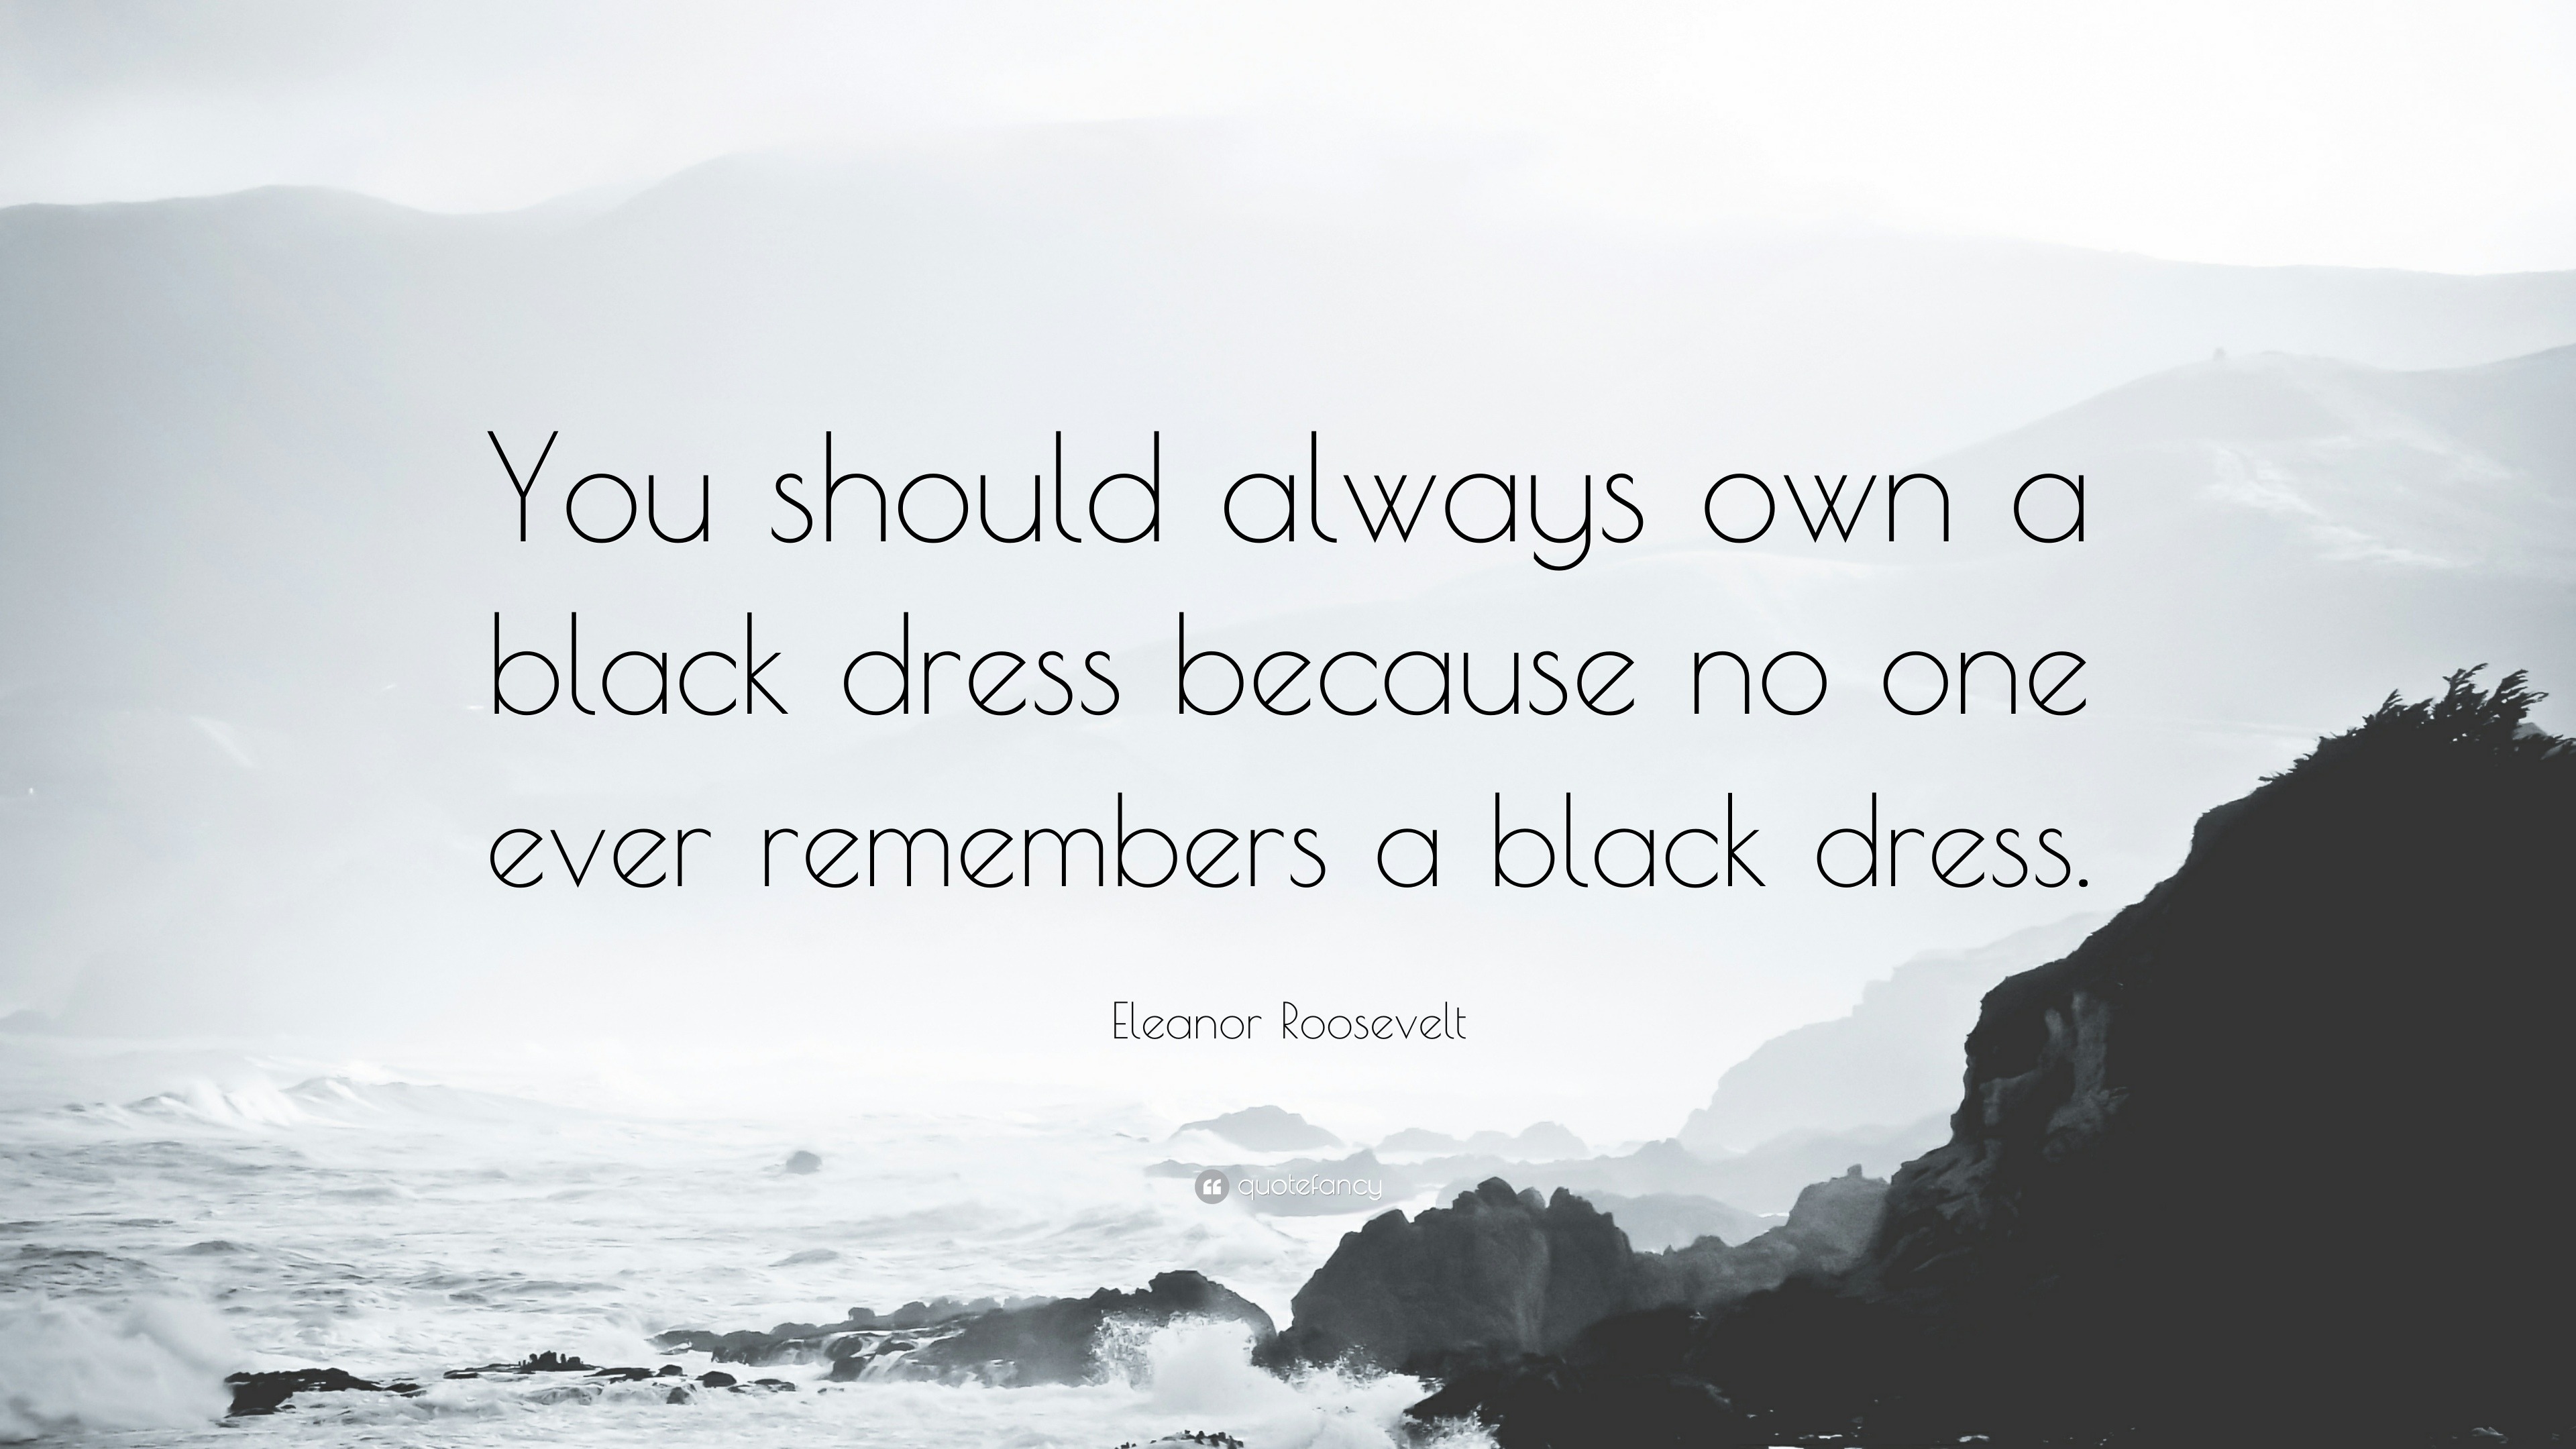 Mennonite Memoir: Fun In A 'Little Black Dress' | WWNO